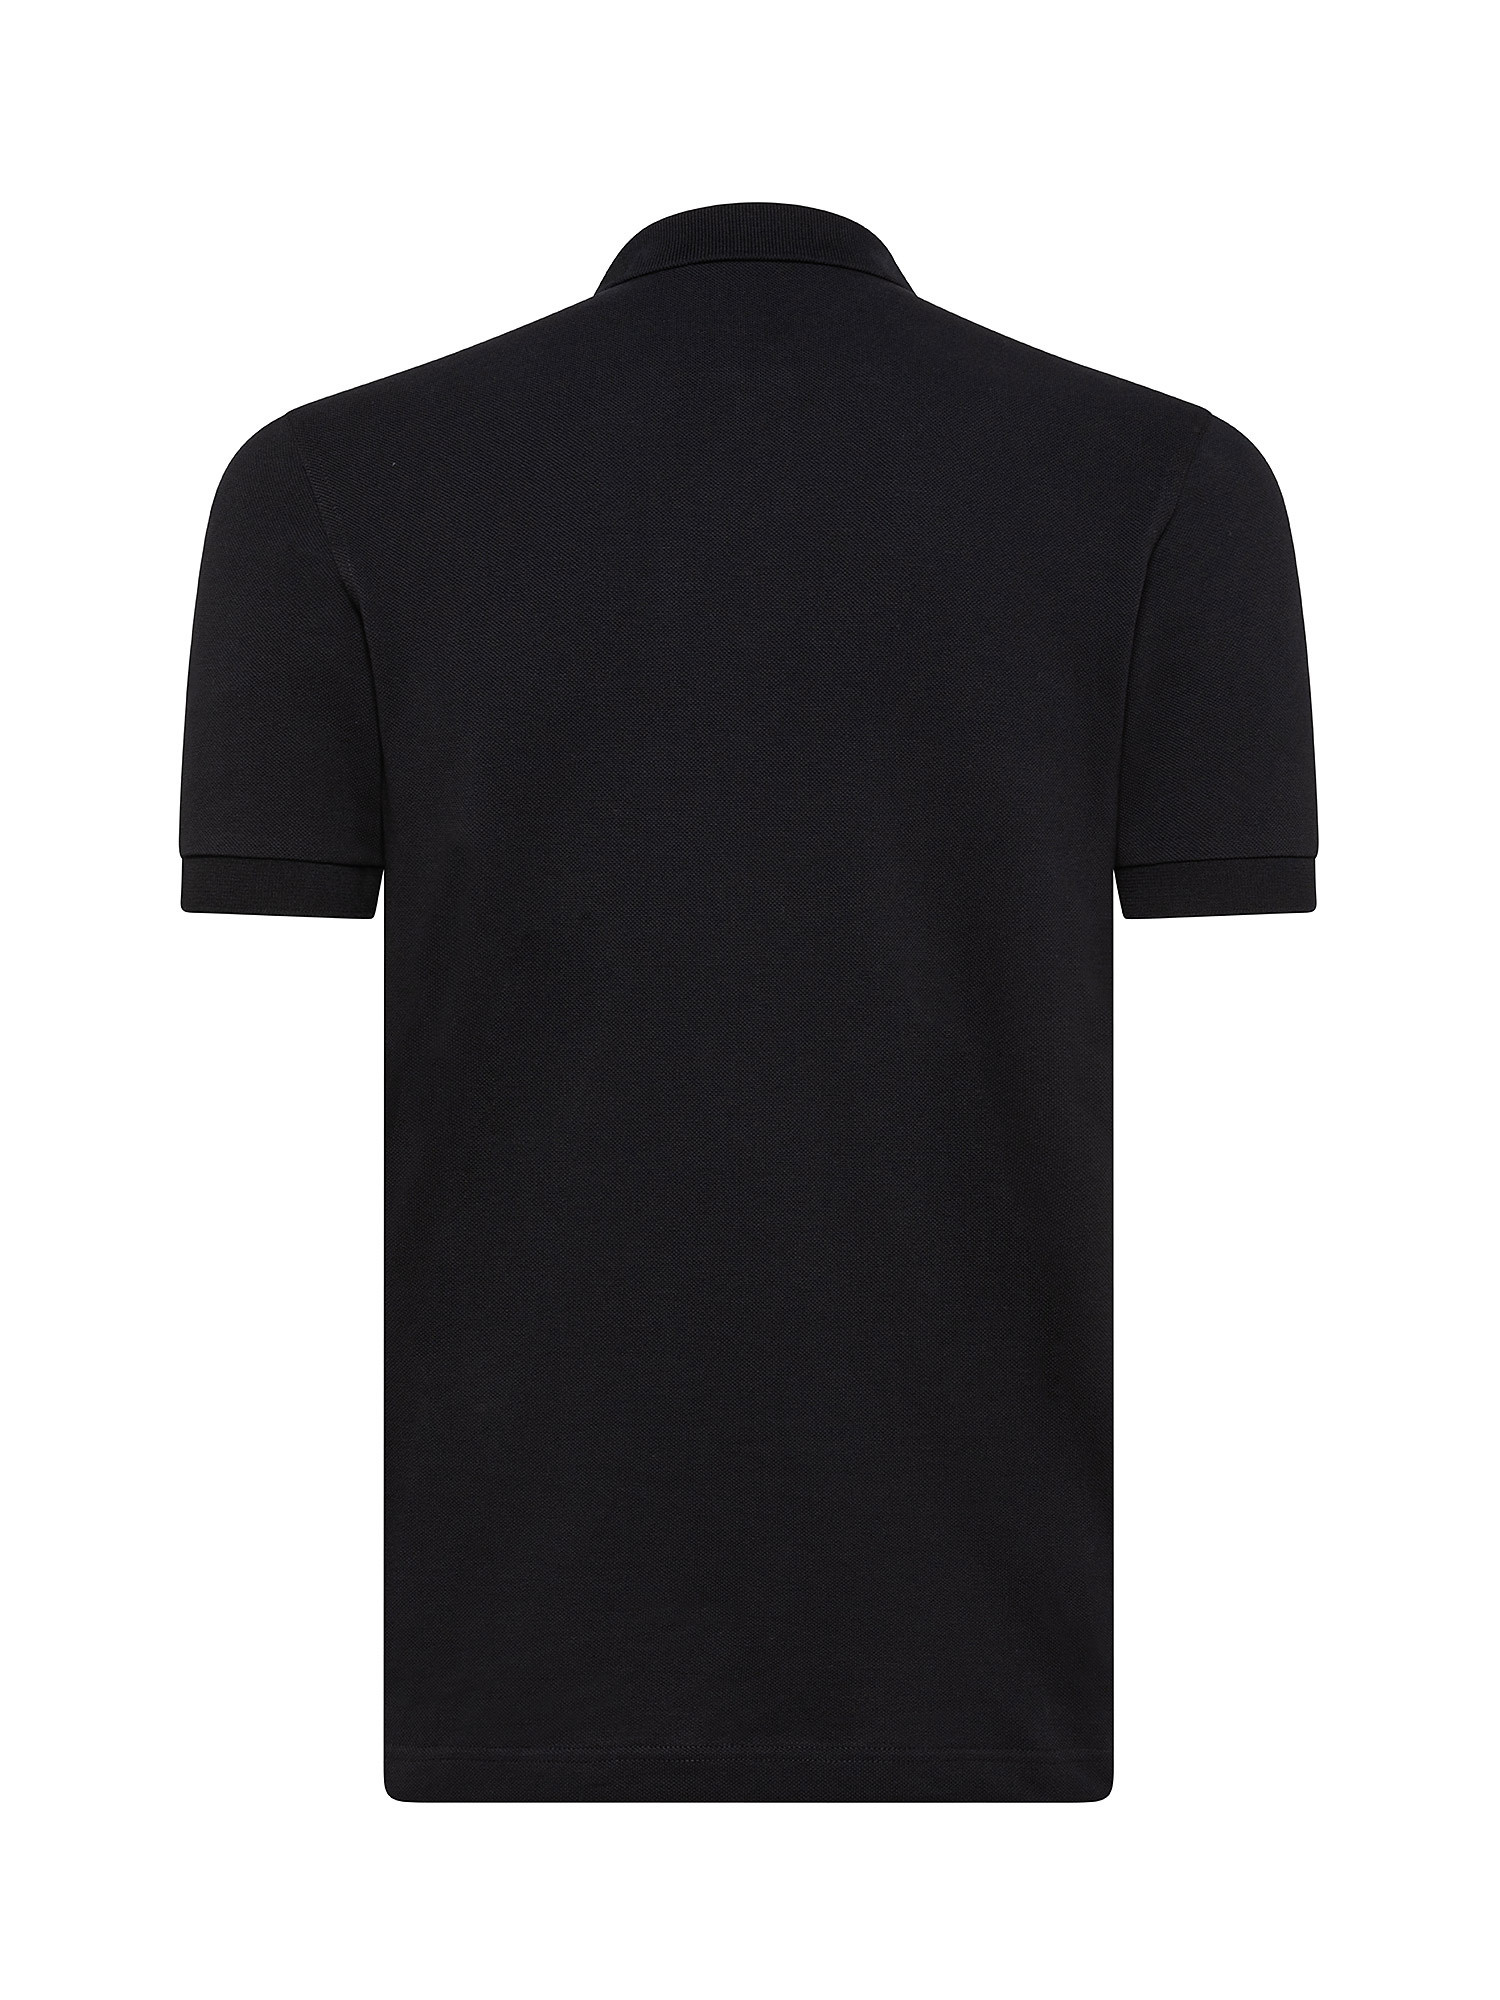 Plain shirt, Black, large image number 1